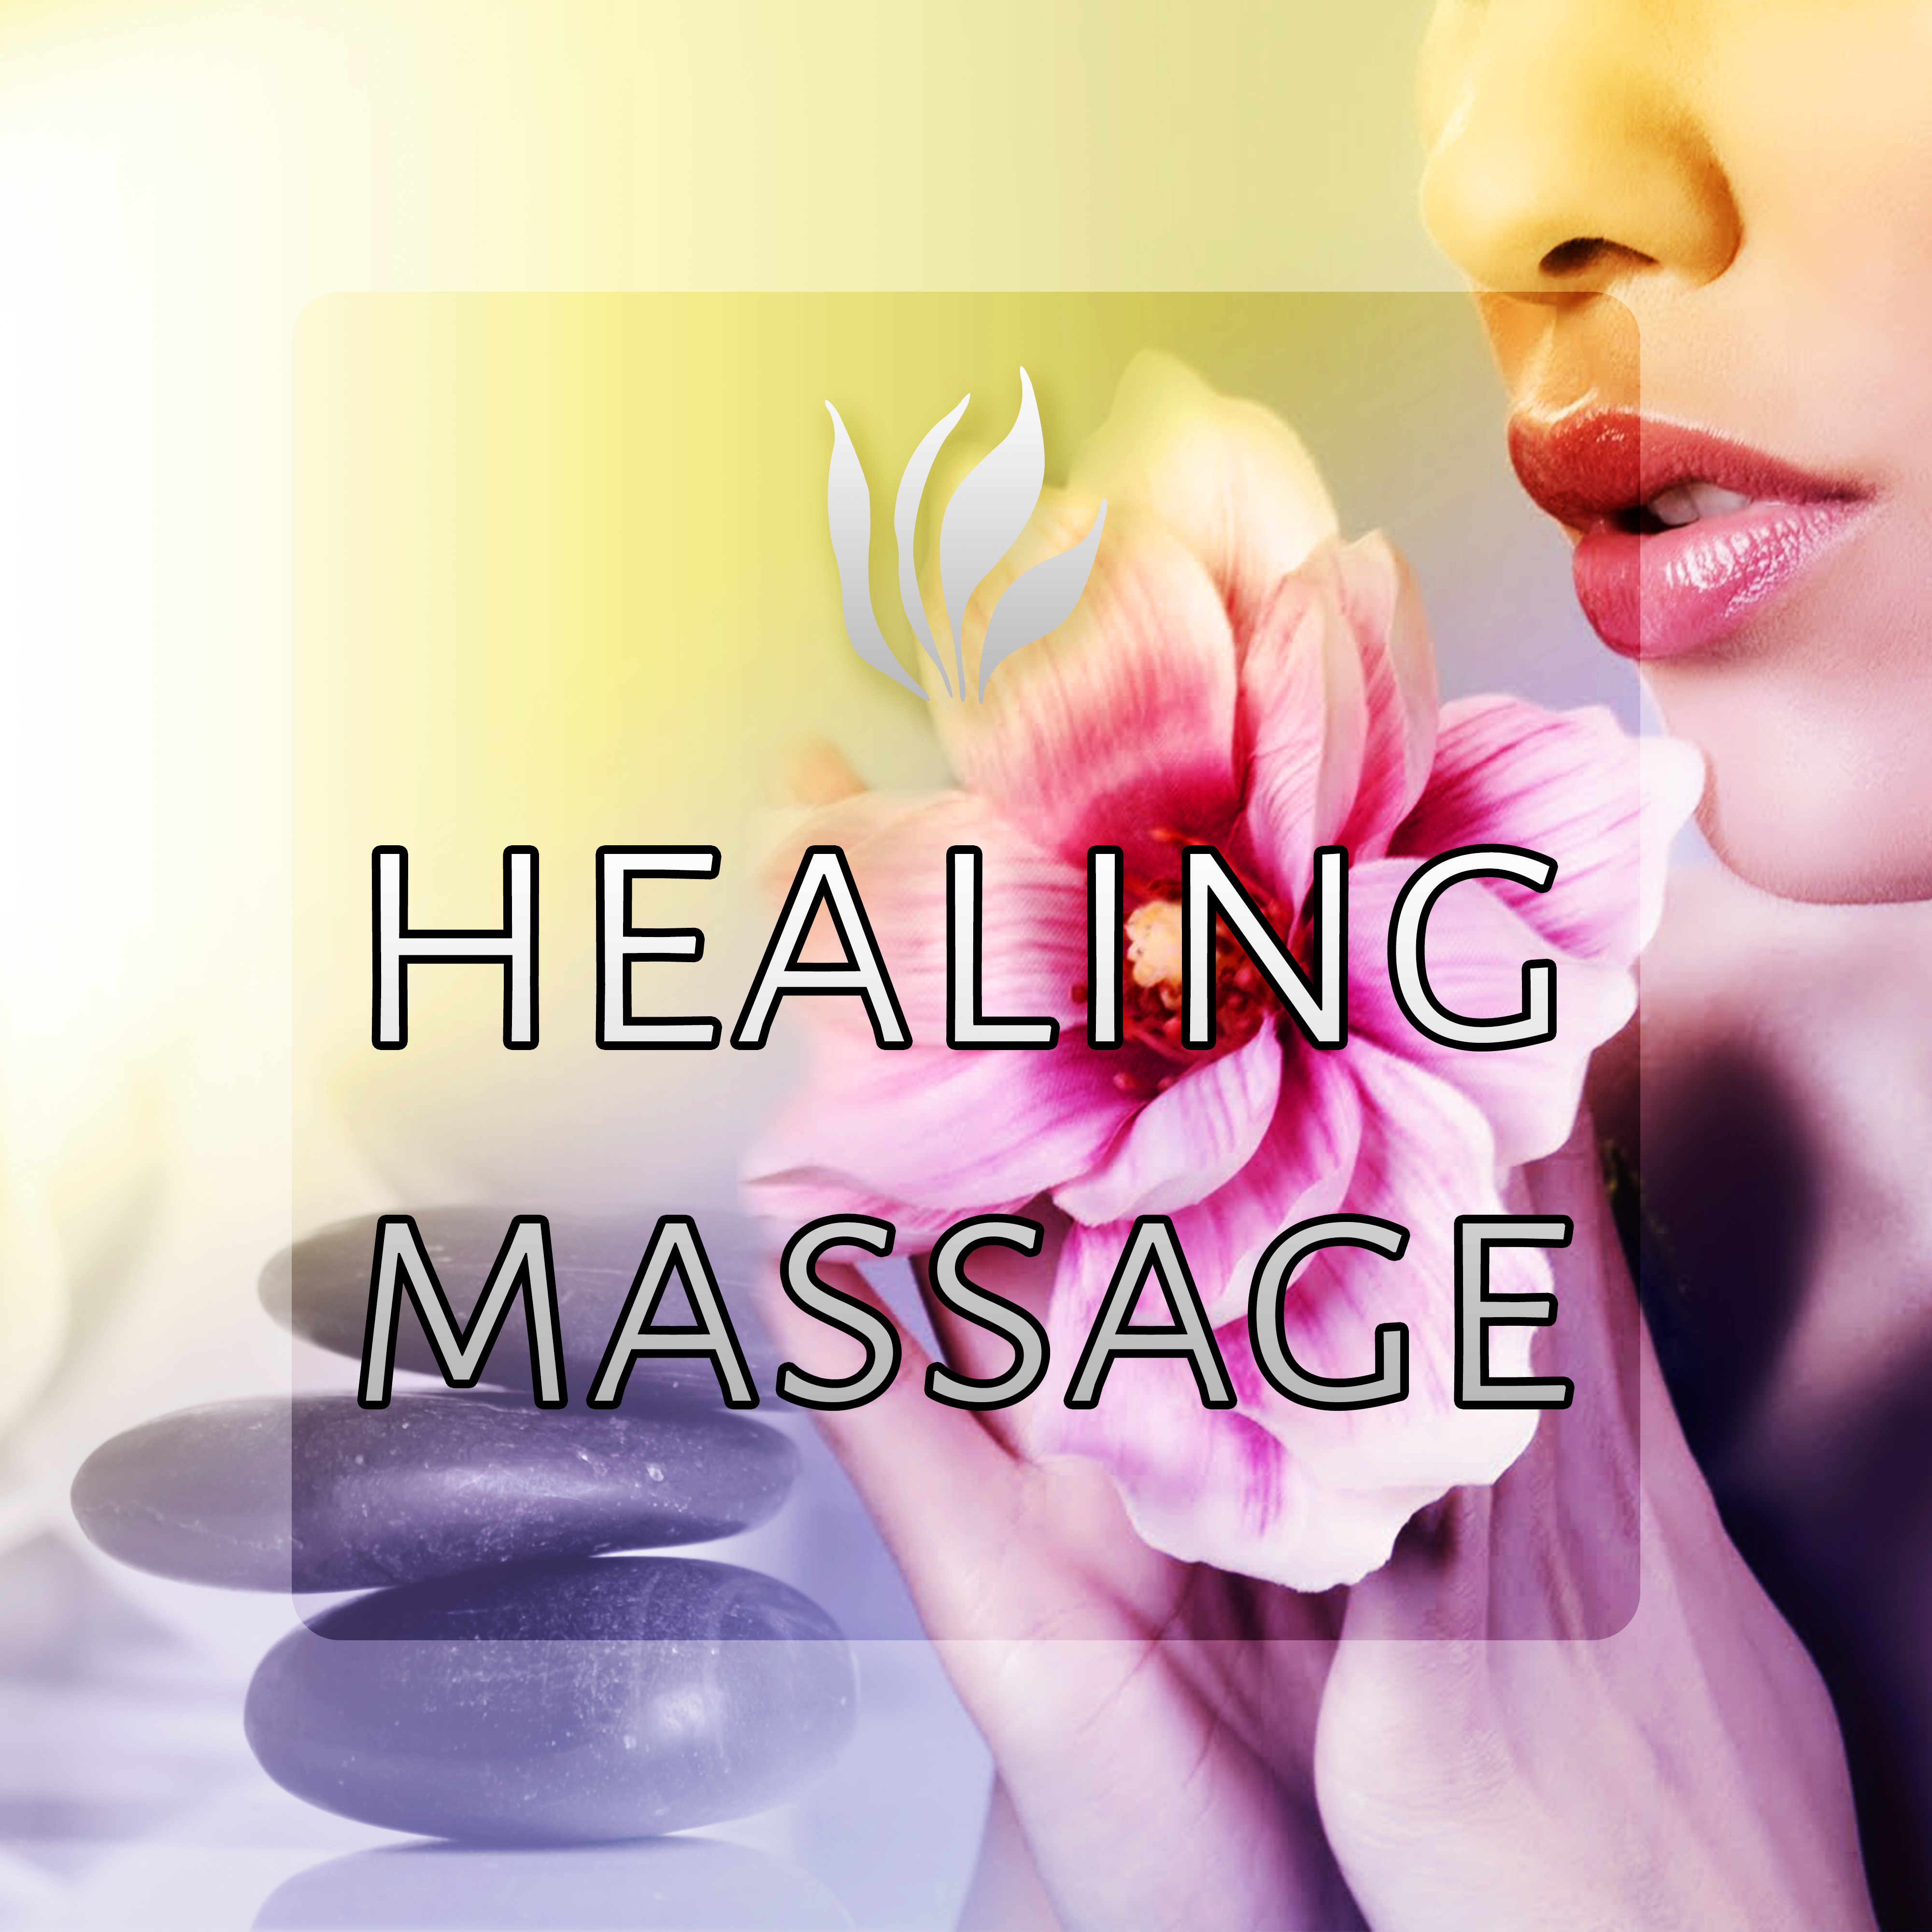 Healing Massage  Zen Spa, Reiki Music, Essential Oils, Oriental Music, Infinite Relax, Reduce Stress, Spa Music, New Age